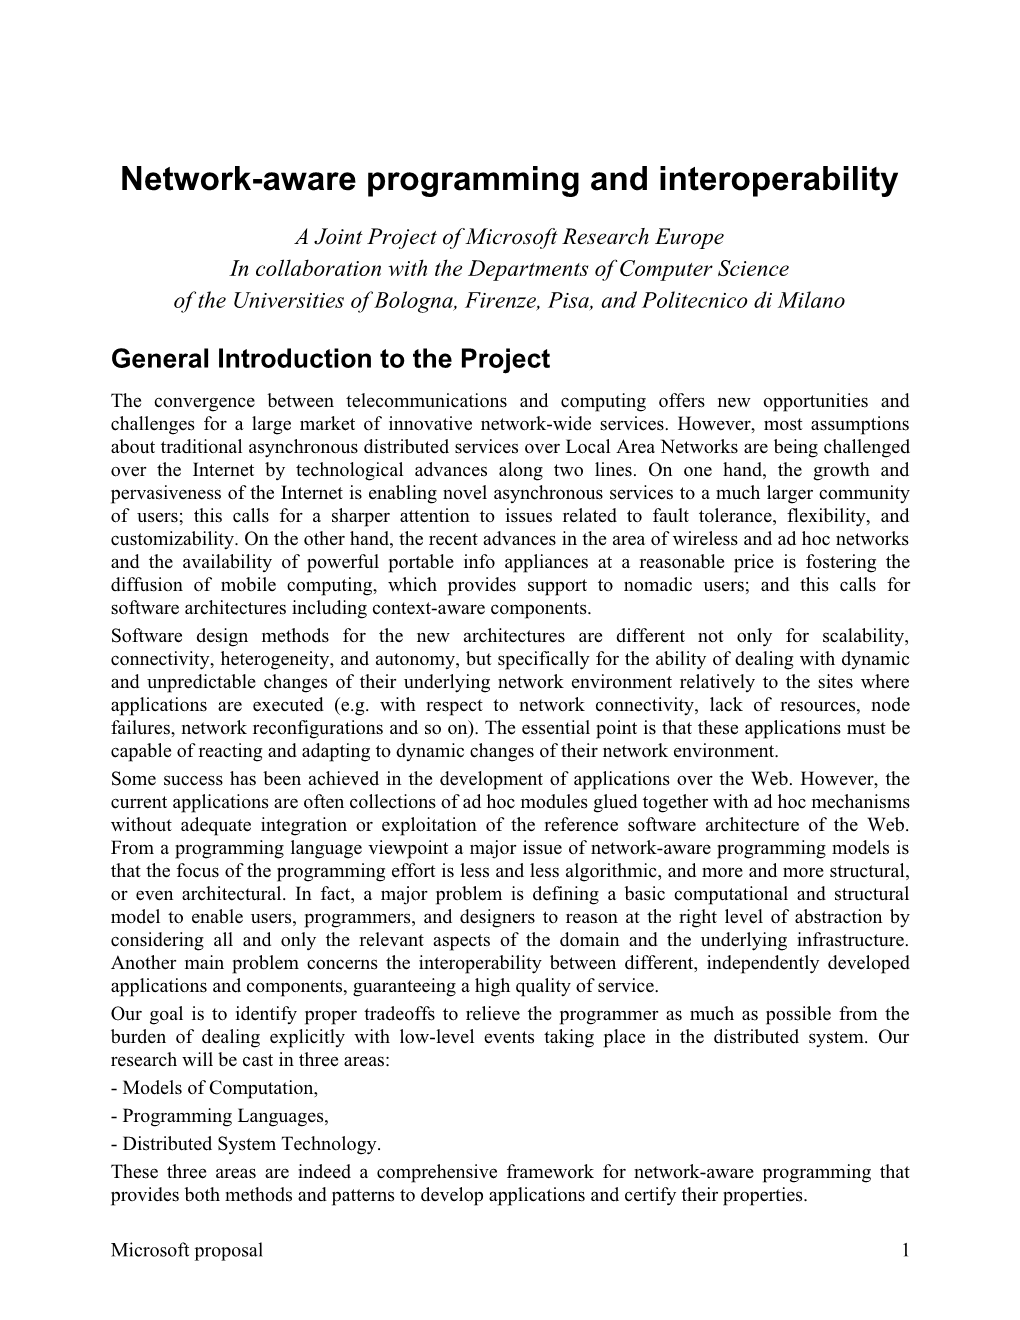 Network-Aware Programming and Interoperability